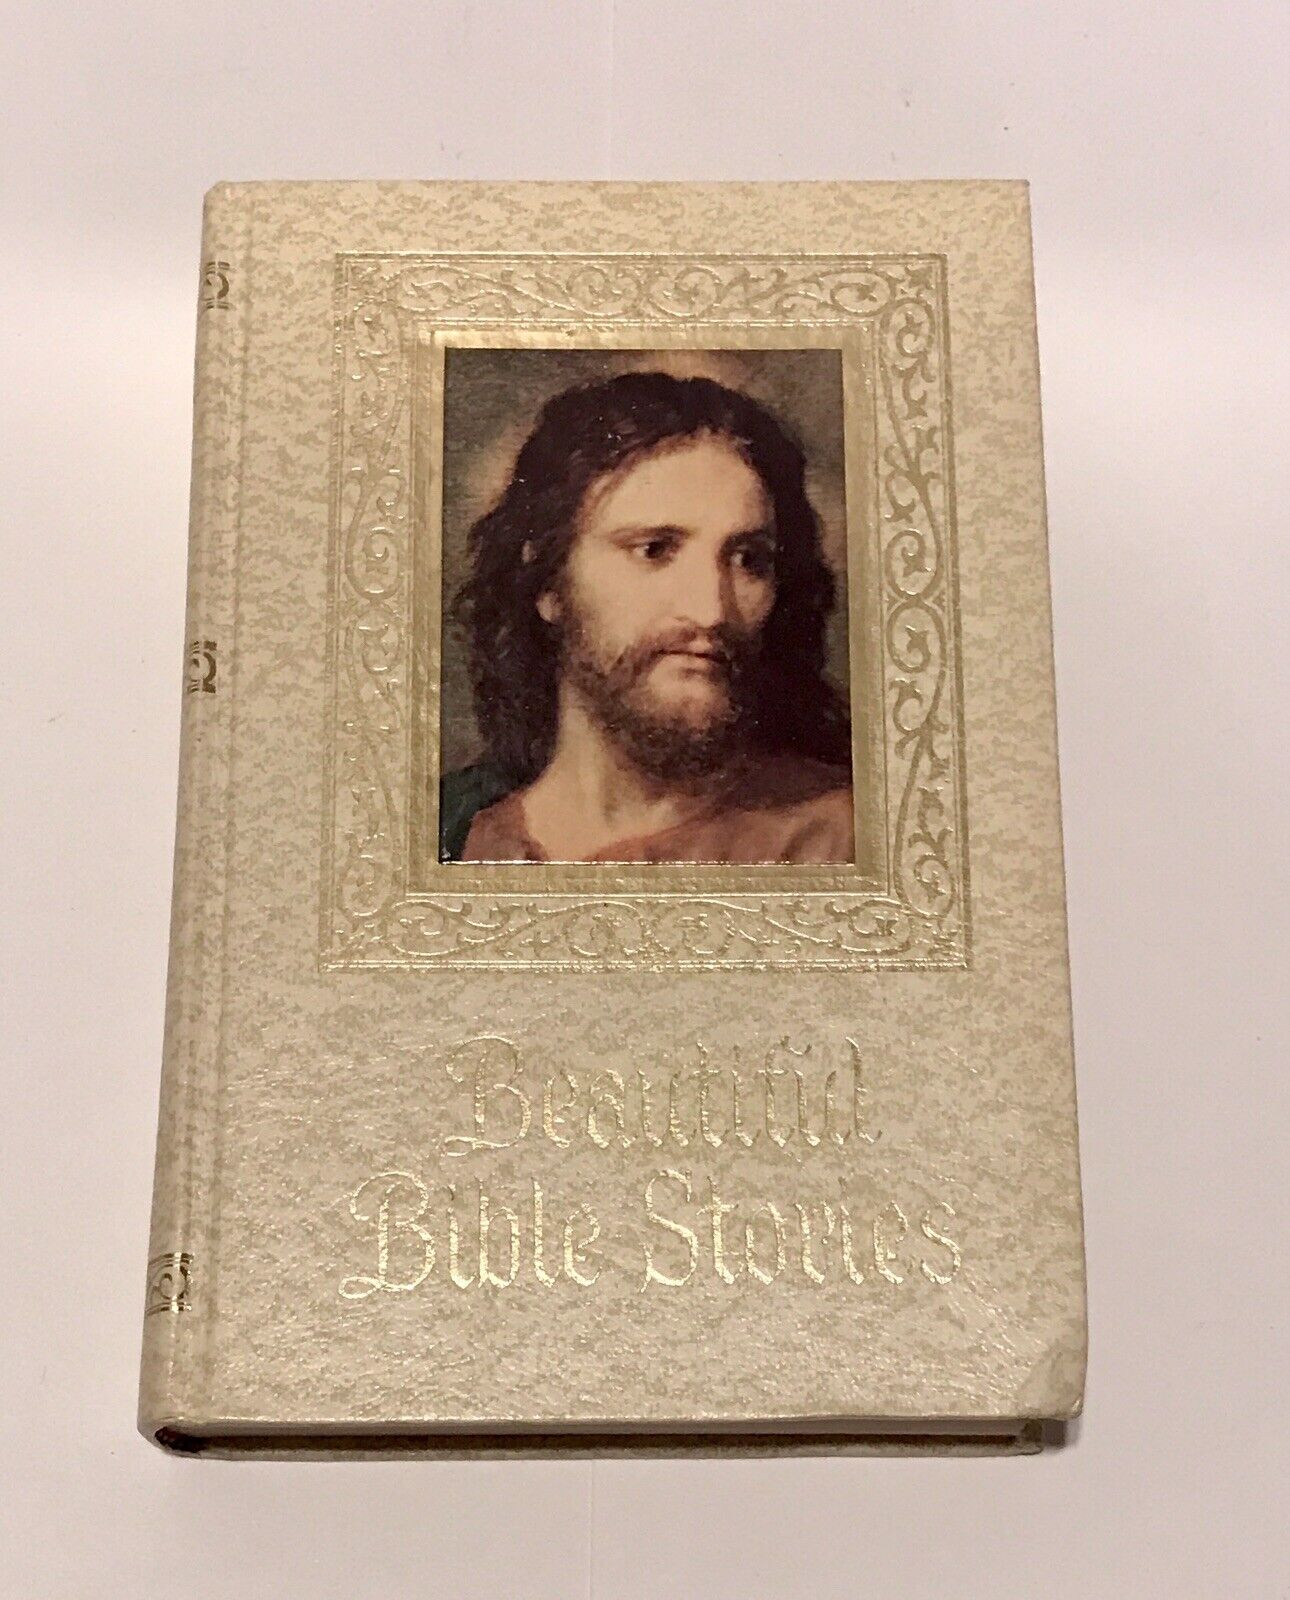 Beautiful Bible Stories. 1978. Vintage.